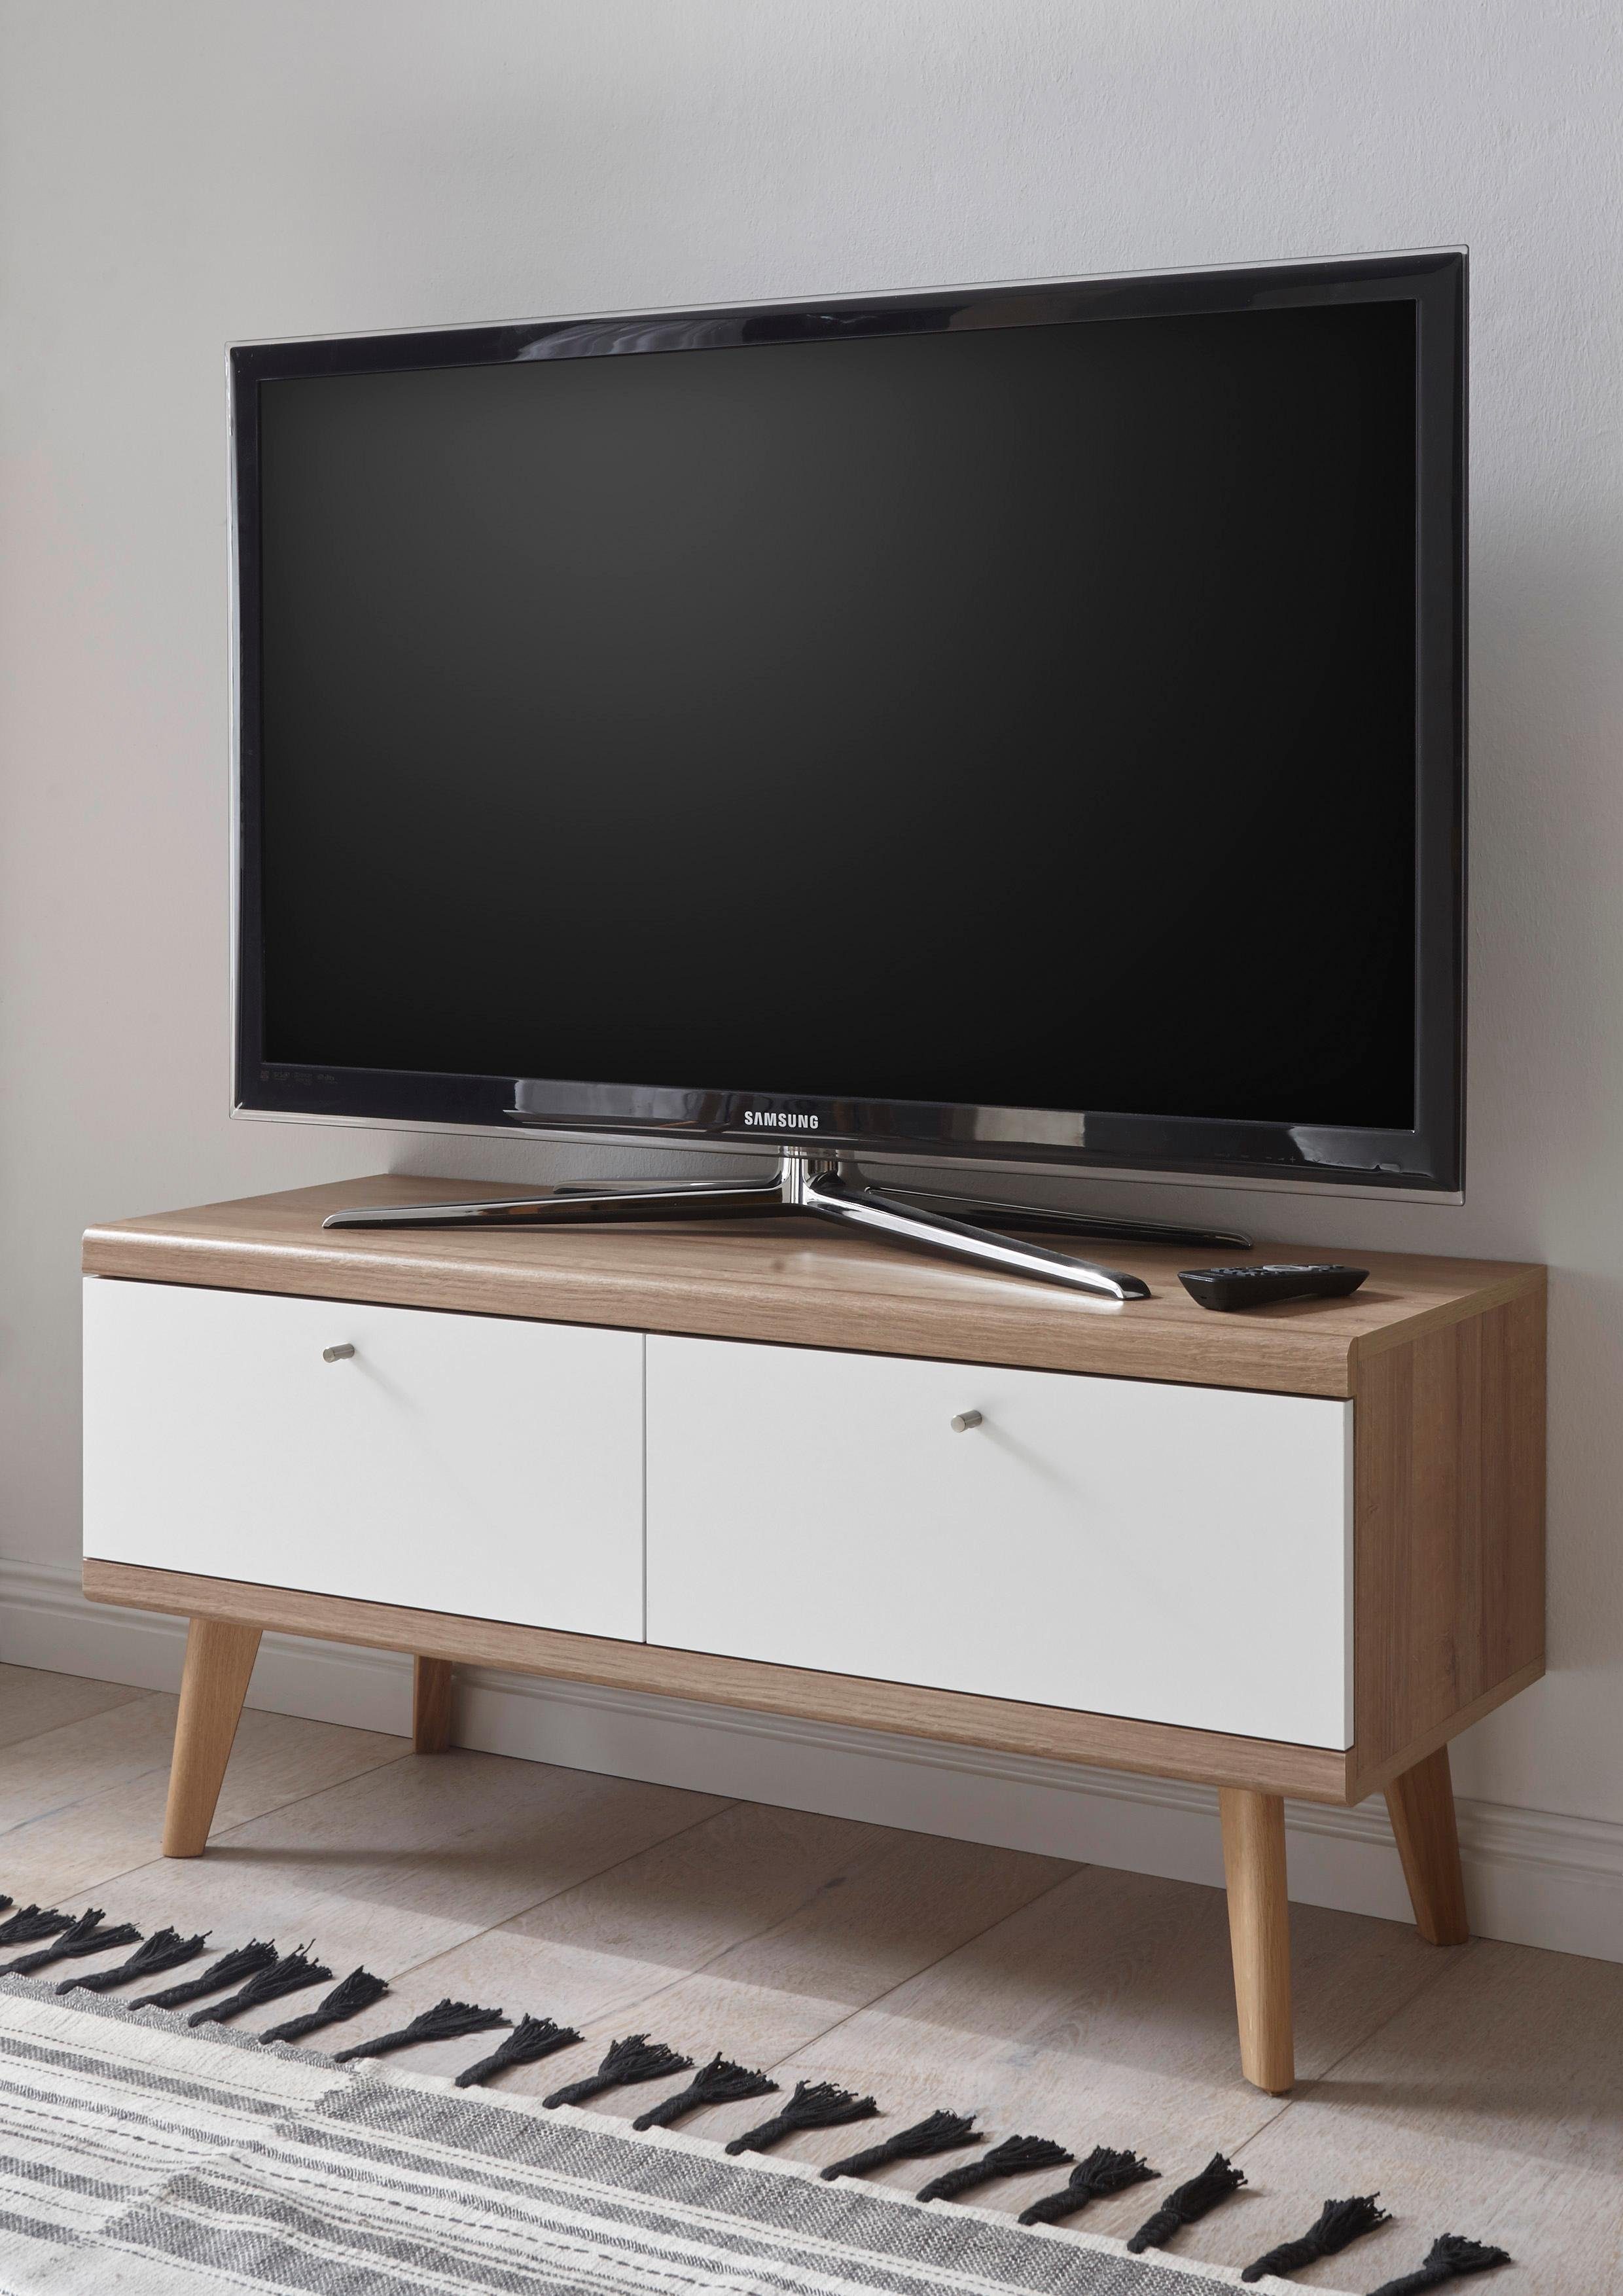 andas Tv-meubel MERLE Scandi design, breedte 107 cm, uit de freundin Home Collection